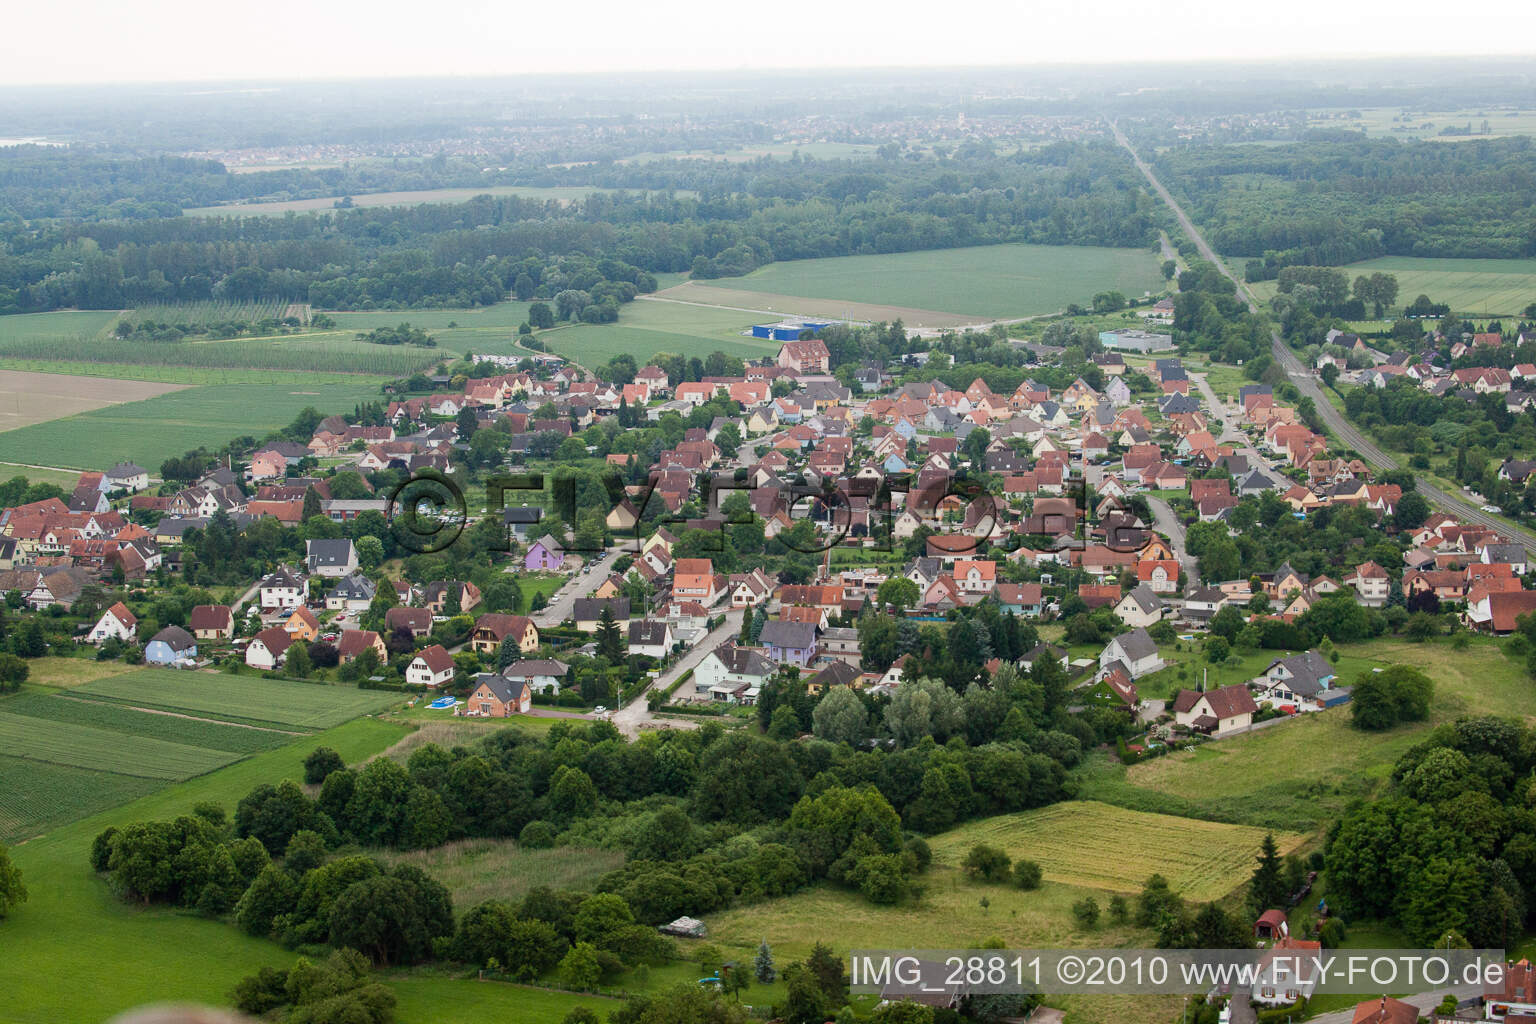 Dengolsheim in Sessenheim in the state Bas-Rhin, France